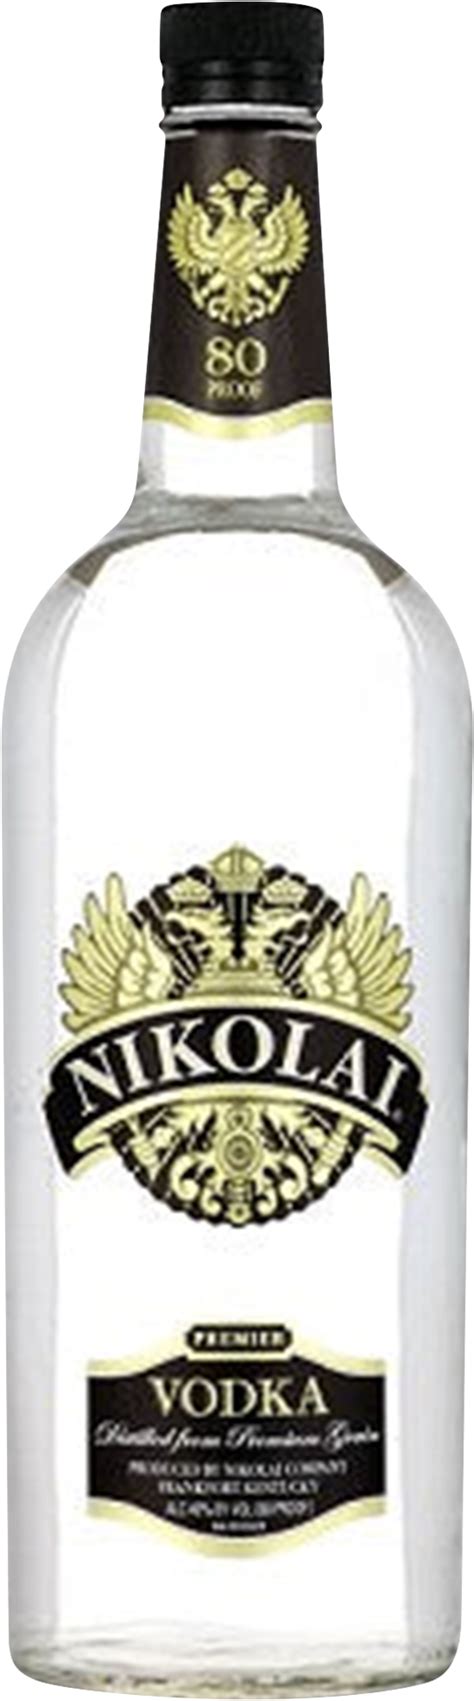 Nikolai Vodka Wine Library